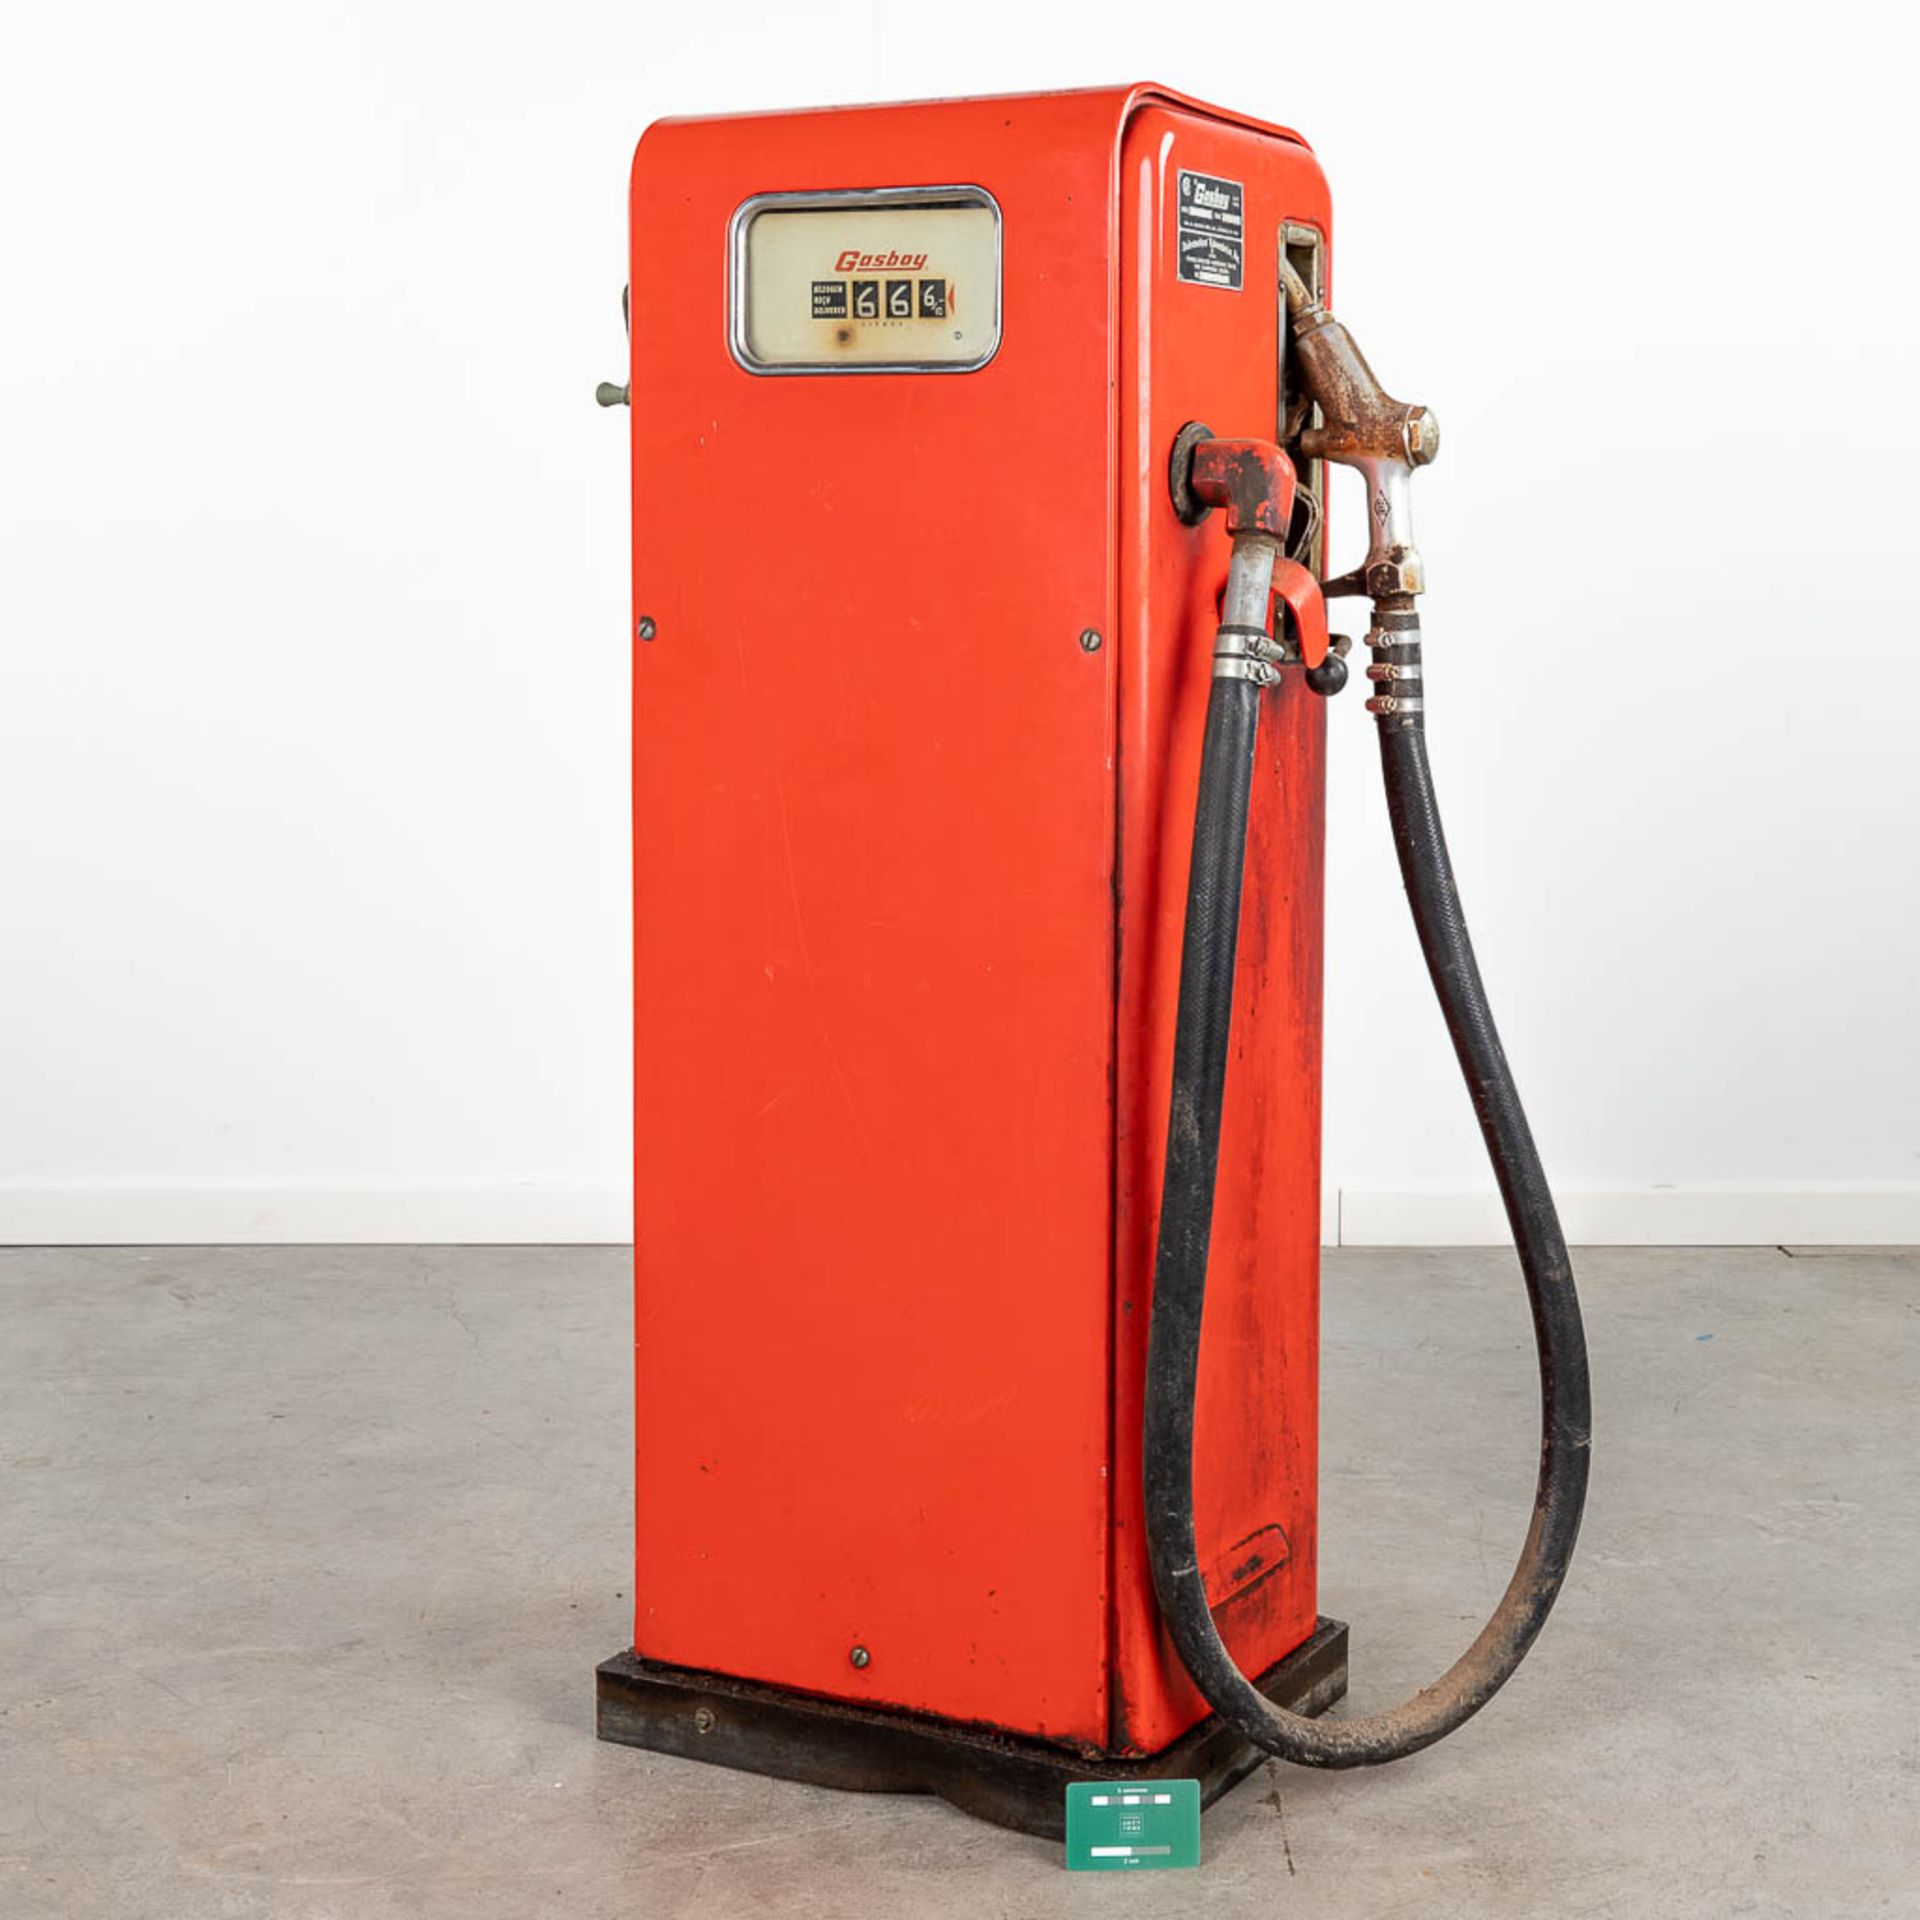 Gasboy, a vintage gasoline pump, circa 1960. (L: 34 x W: 58 x H: 112 cm) - Image 2 of 9